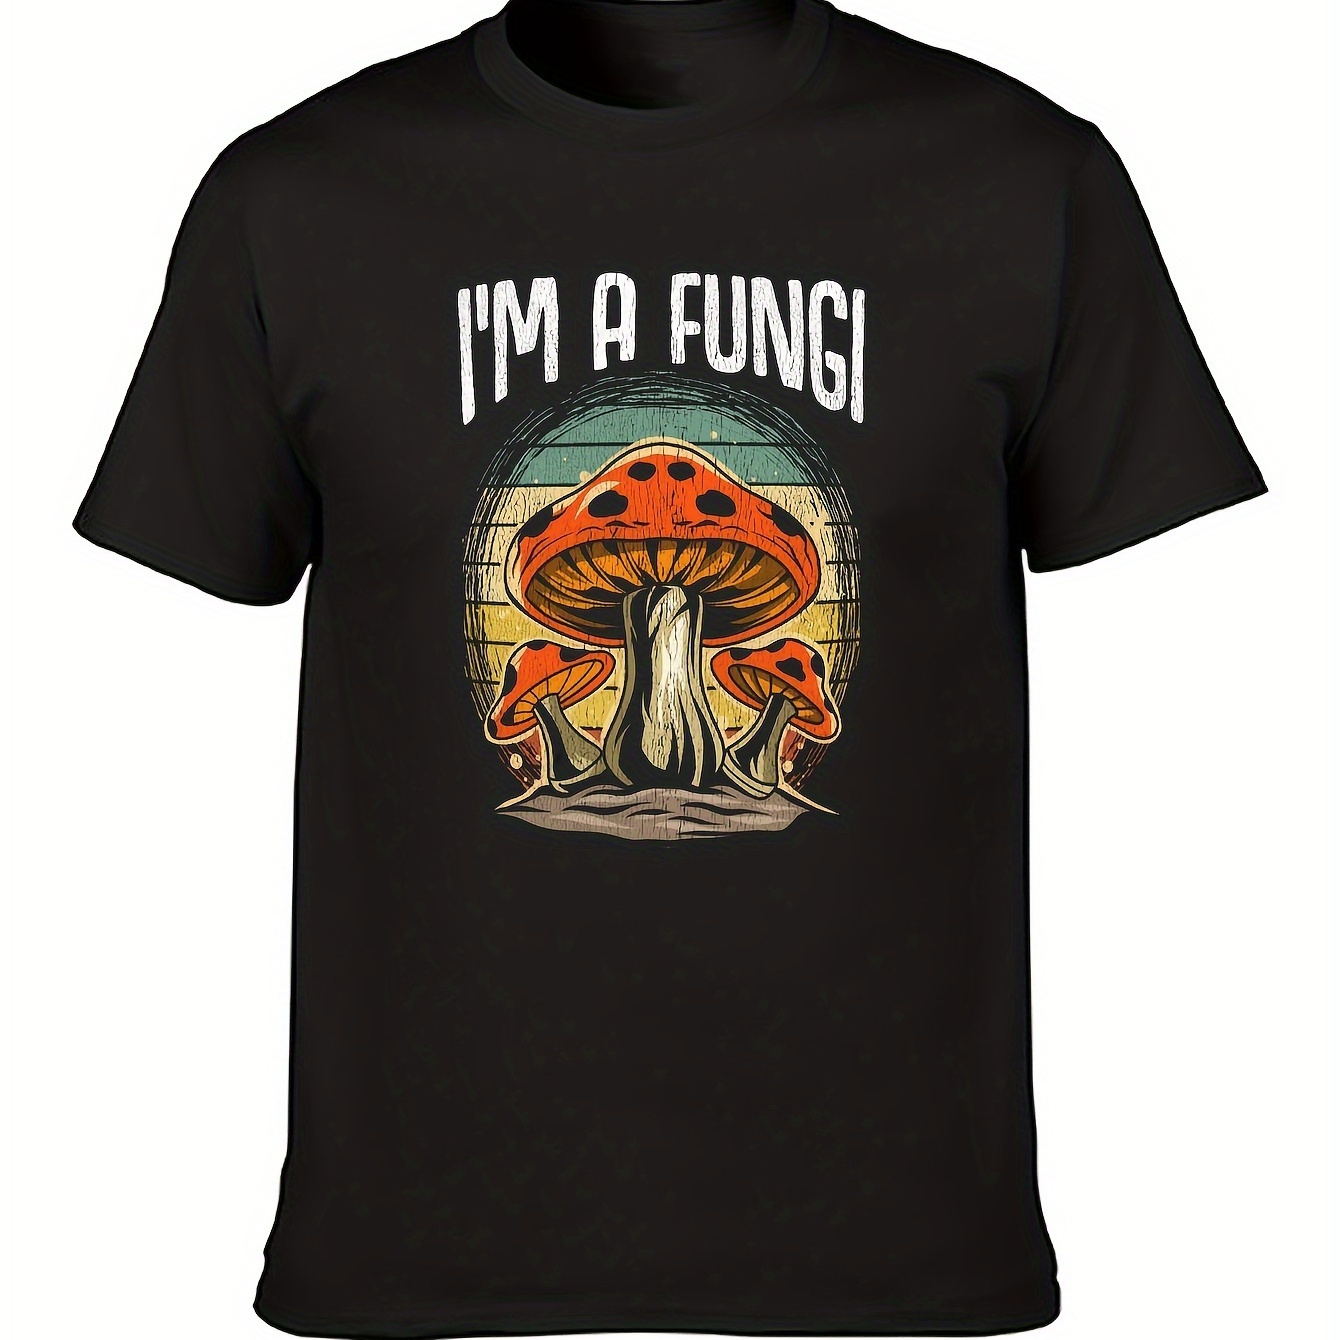 

I'm A Fungi Men's Graphic Tees Soft Cotton Crew Neck Short Sleeve T-shirt Funny Novelty Design Shirts